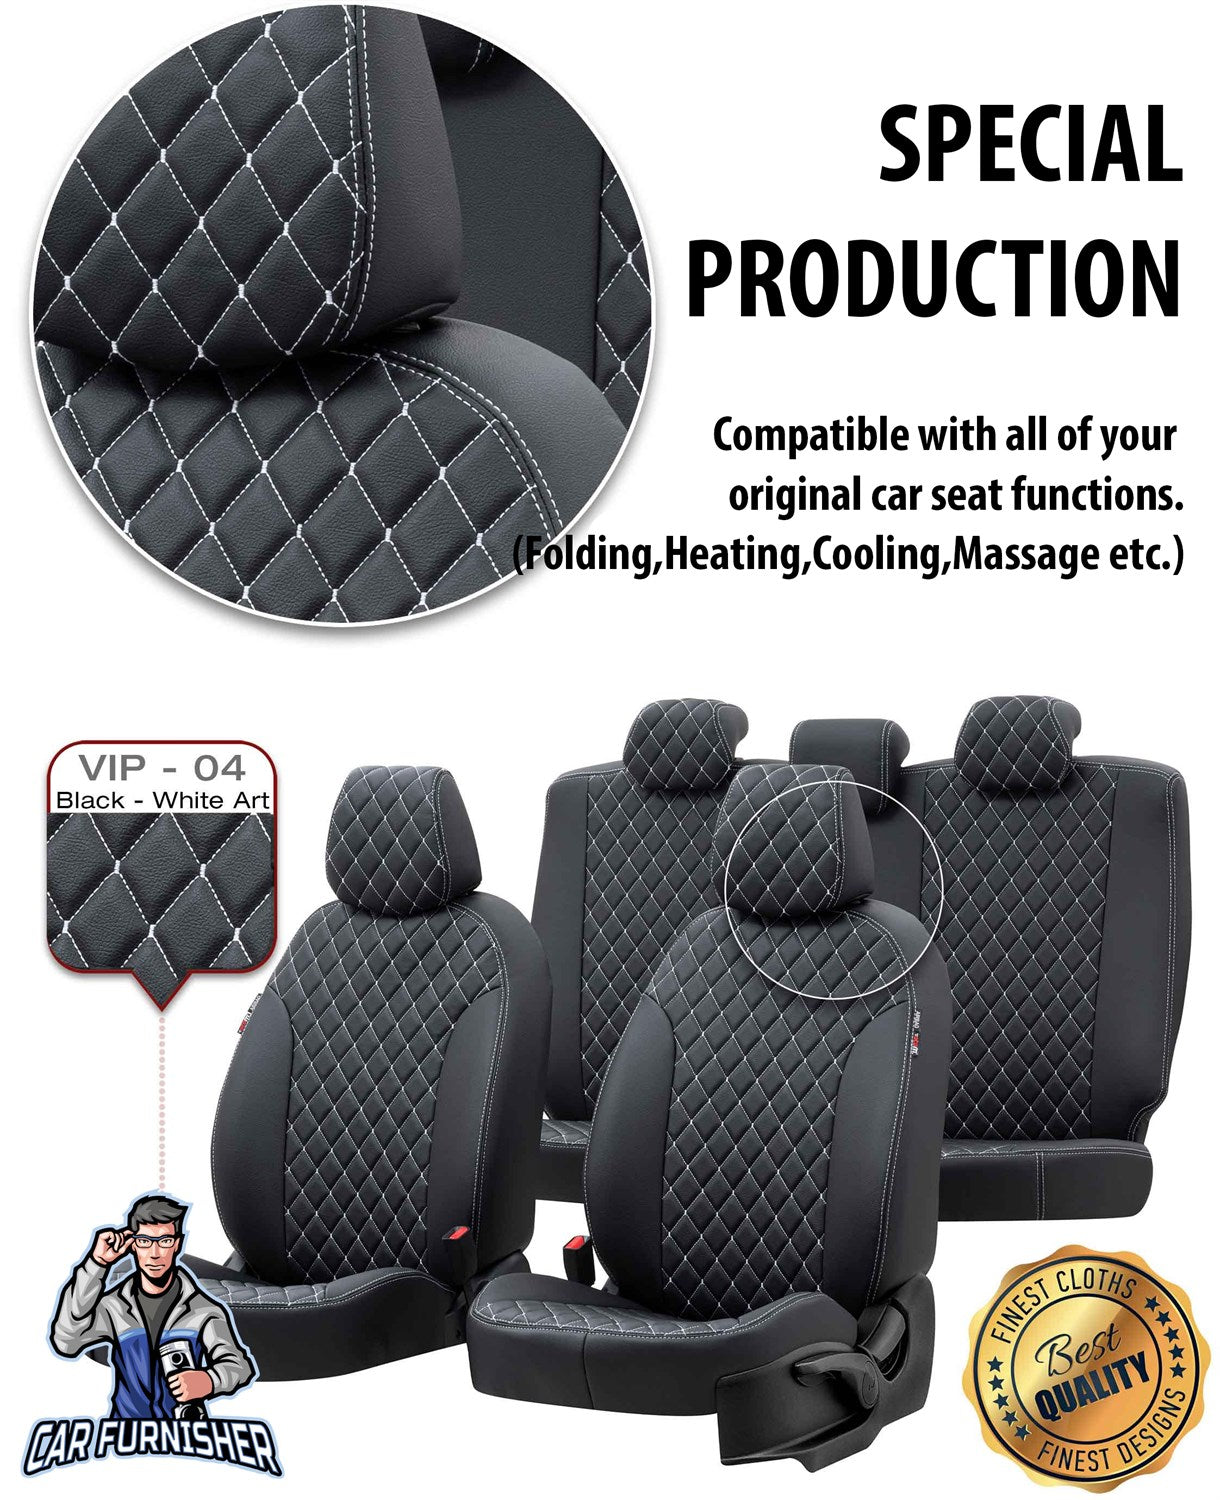 Toyota Prius Seat Cover Madrid Leather Design Dark Gray Leather